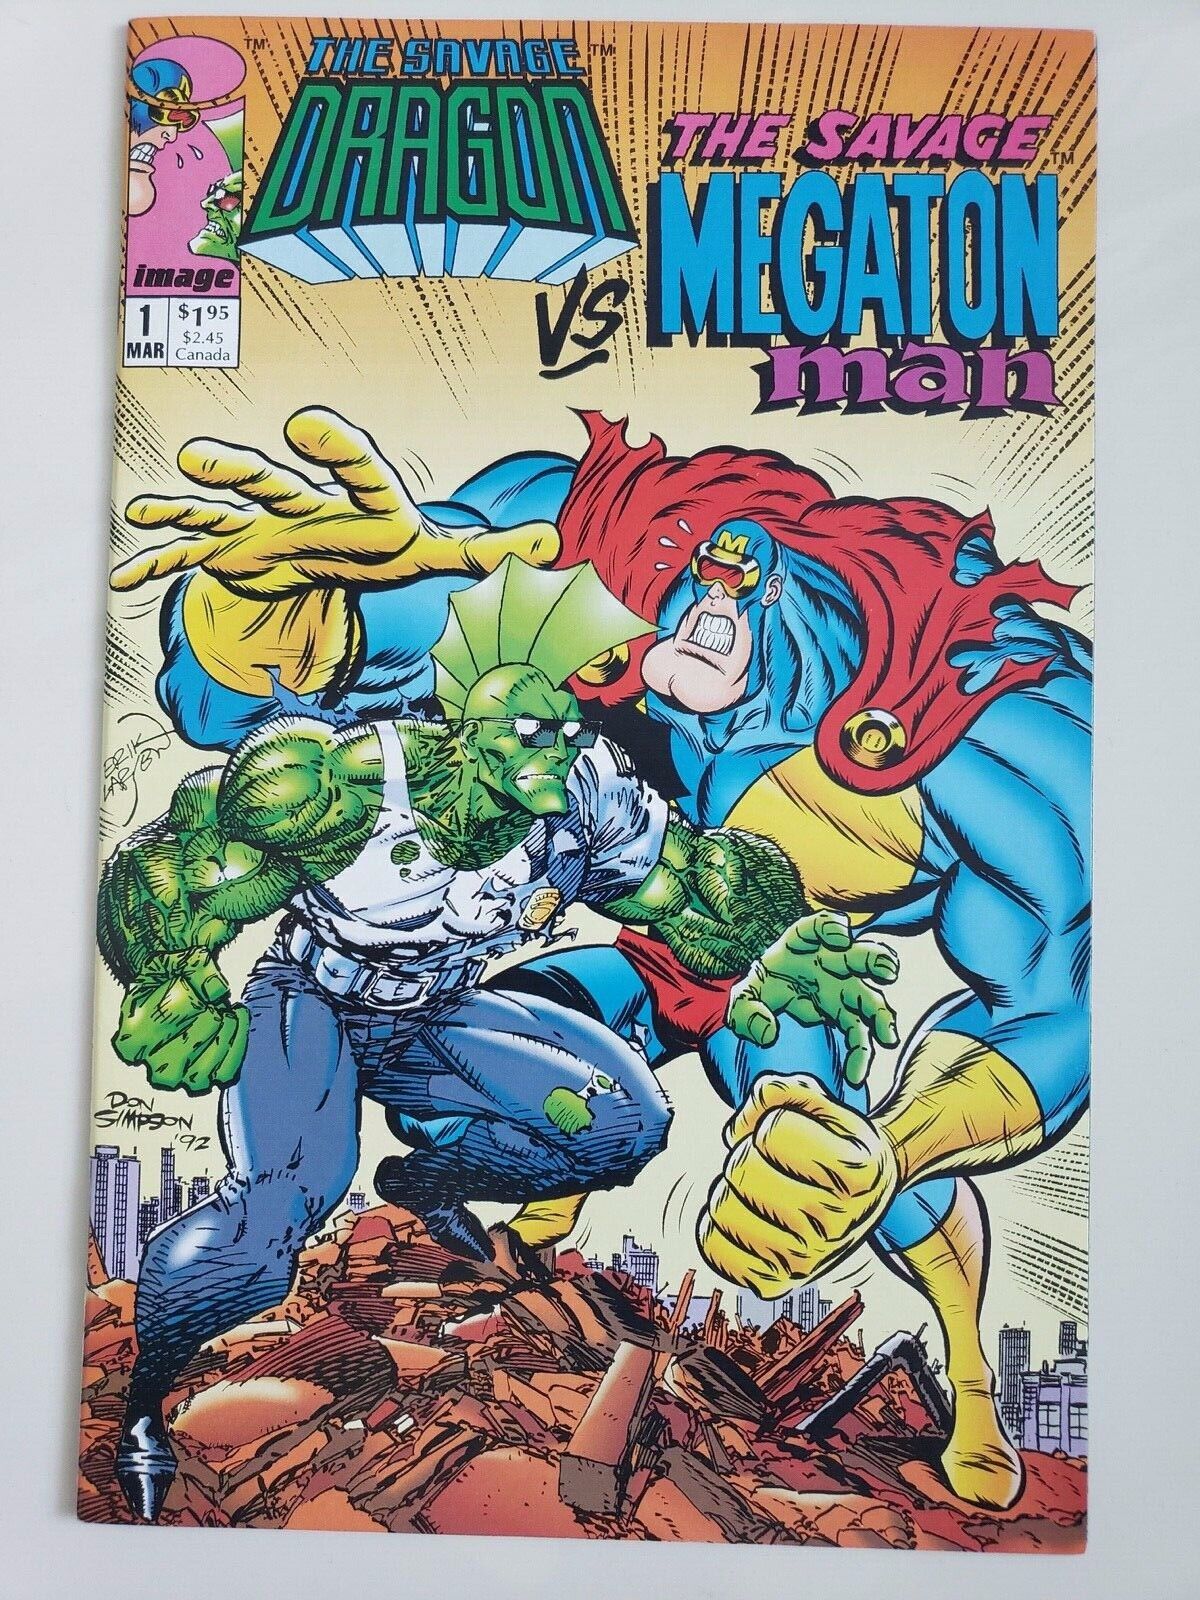 THE SAVAGE DRAGON Vs THE SAVAGE MEGATON MAN #1 (1993) 1ST APPEARANCE SHE-DRAGON